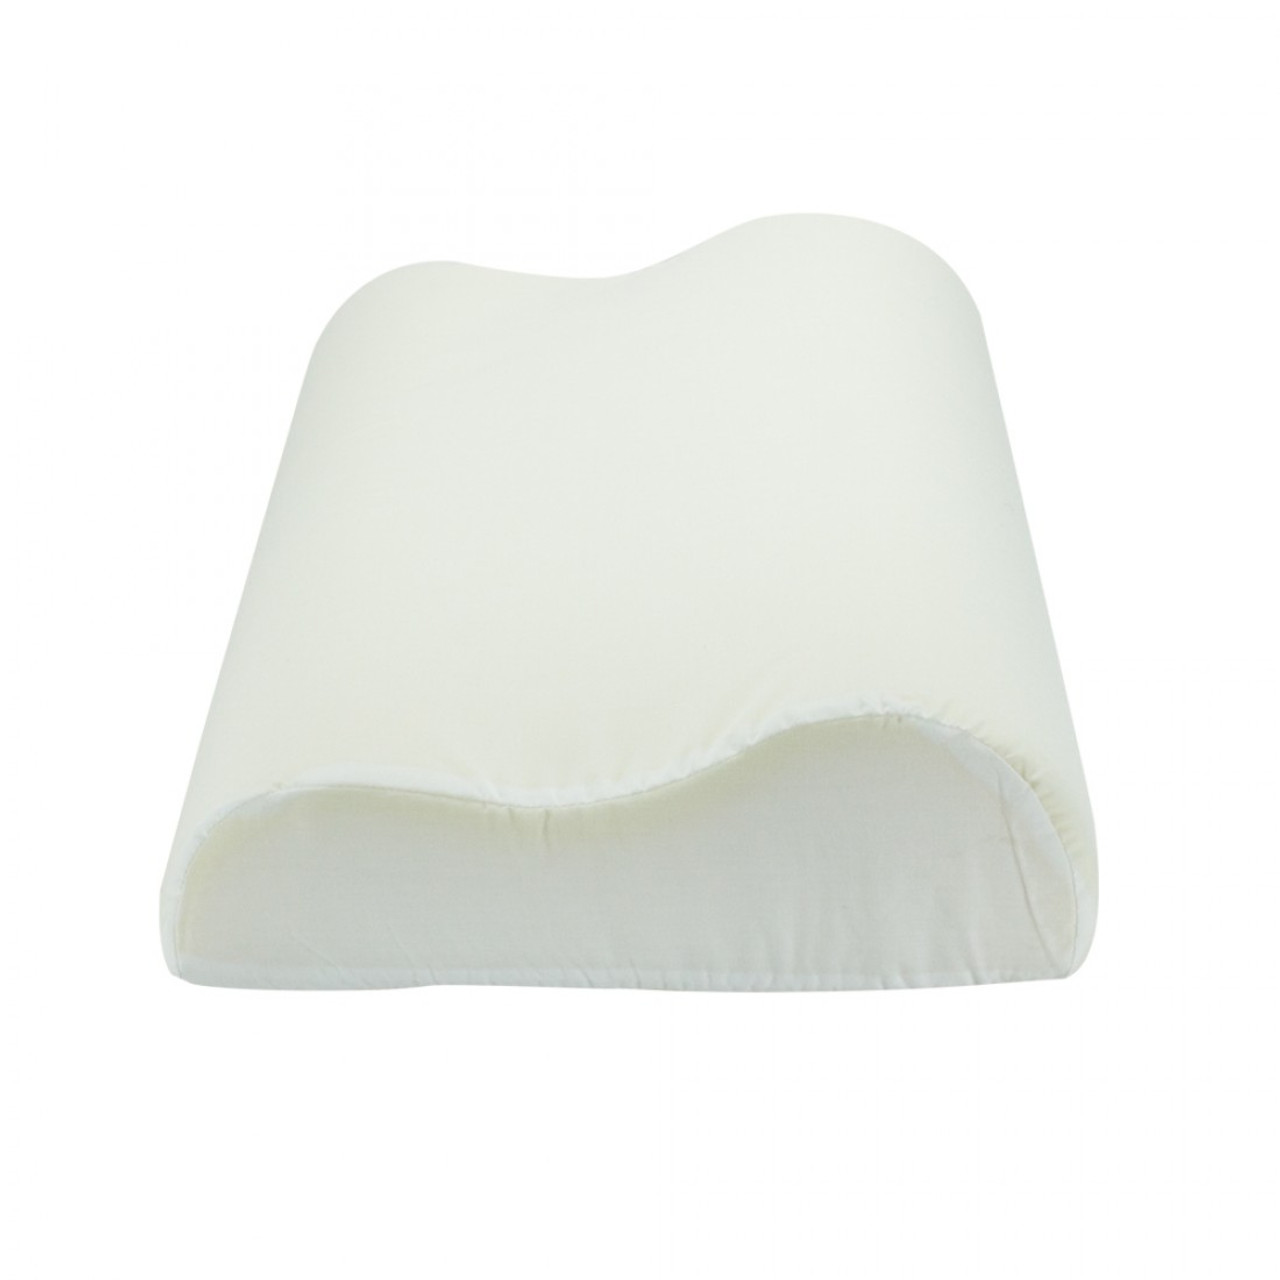 ObusFormeÂ® PL-STD-01 Cervical Pillow - Side, Back, Stomach, Firm, Memory Foam